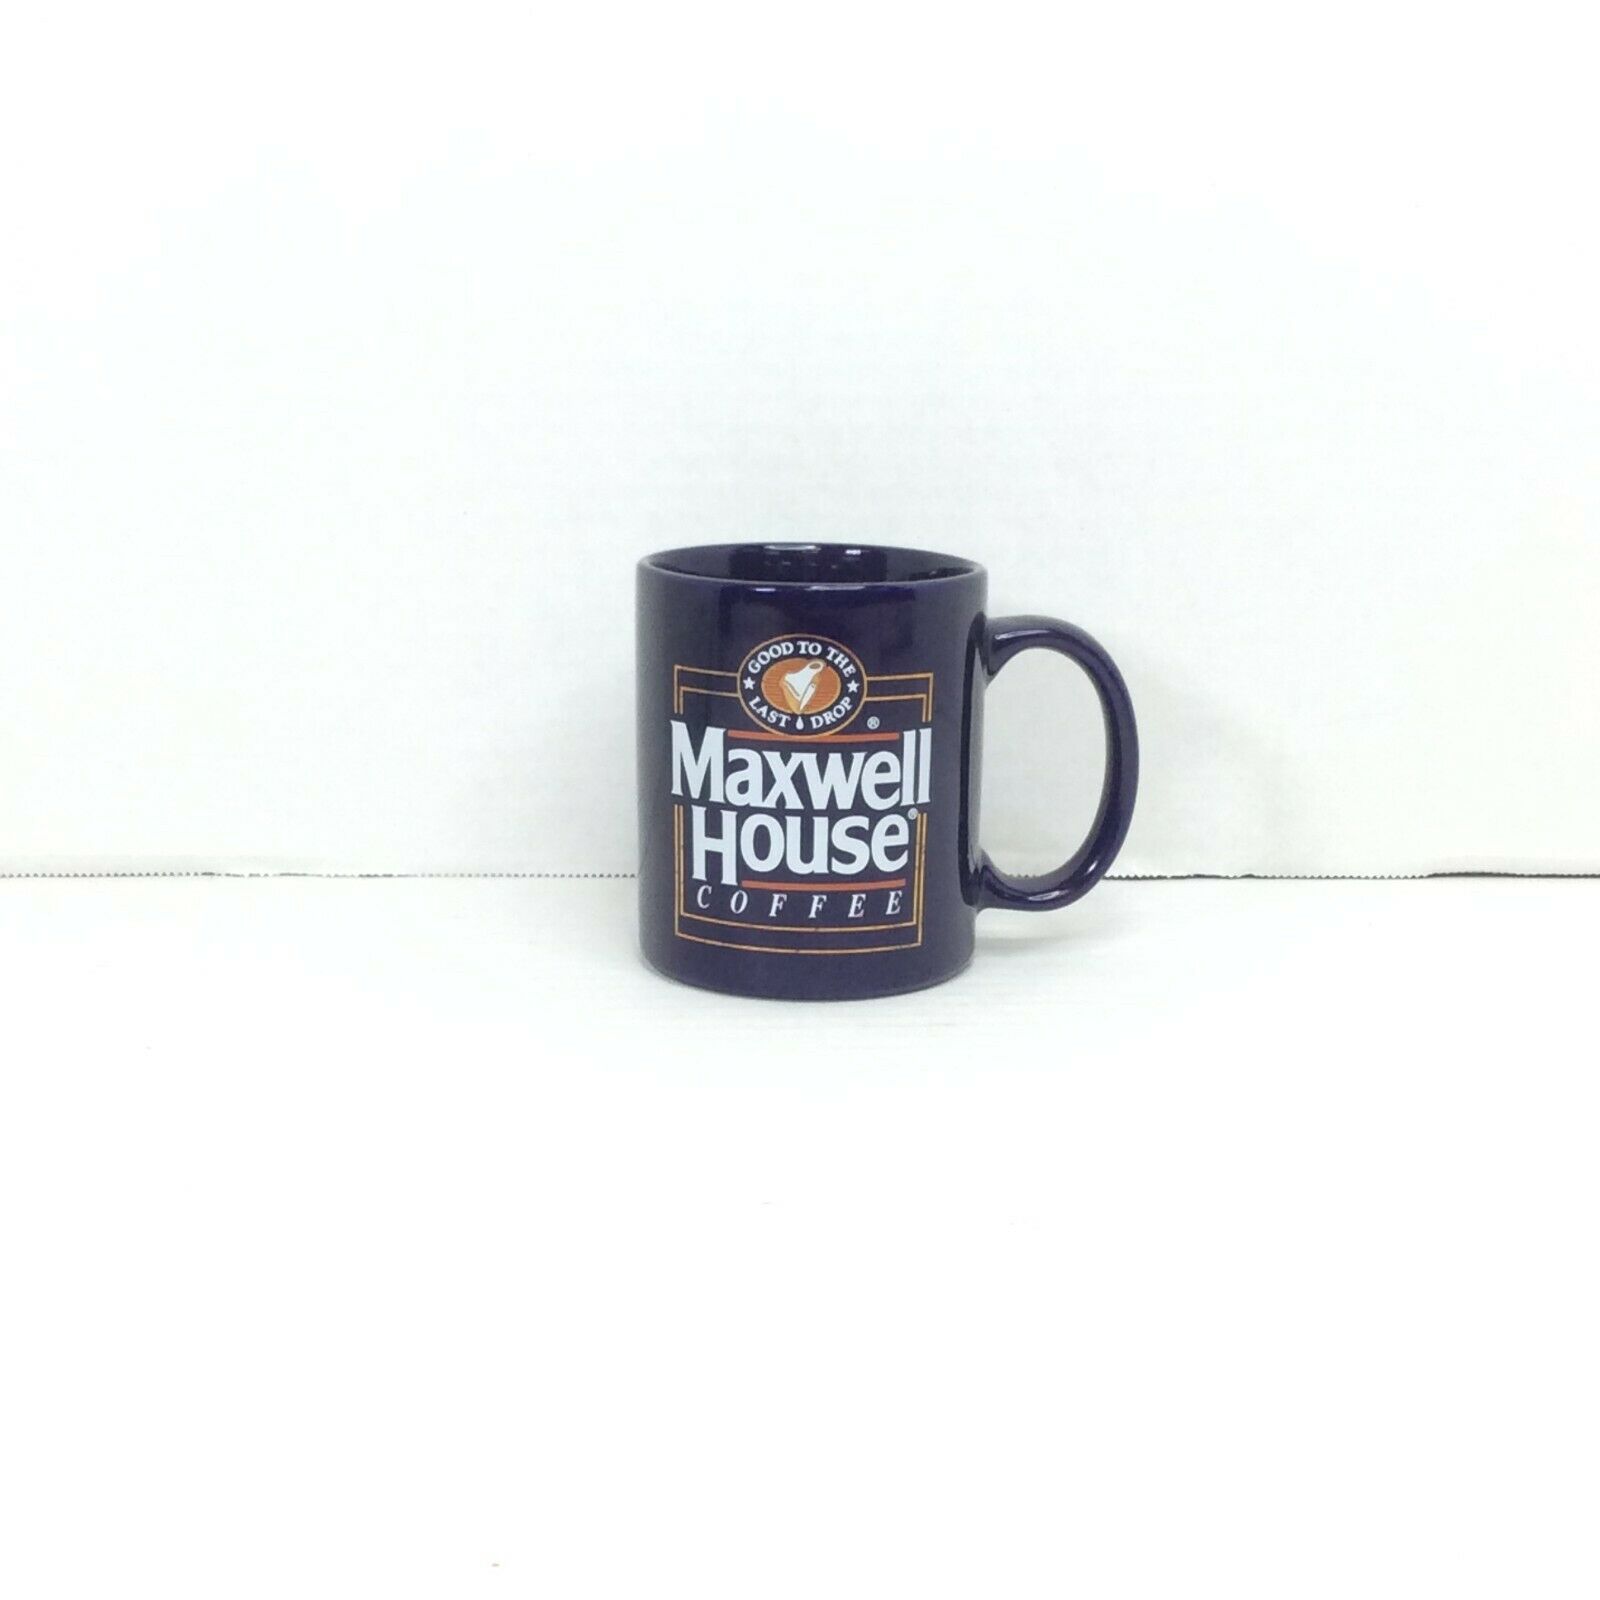 Maxwell House Coffee "good To The Last Drop!" Ceramic Cup/mug 3.75" Tall